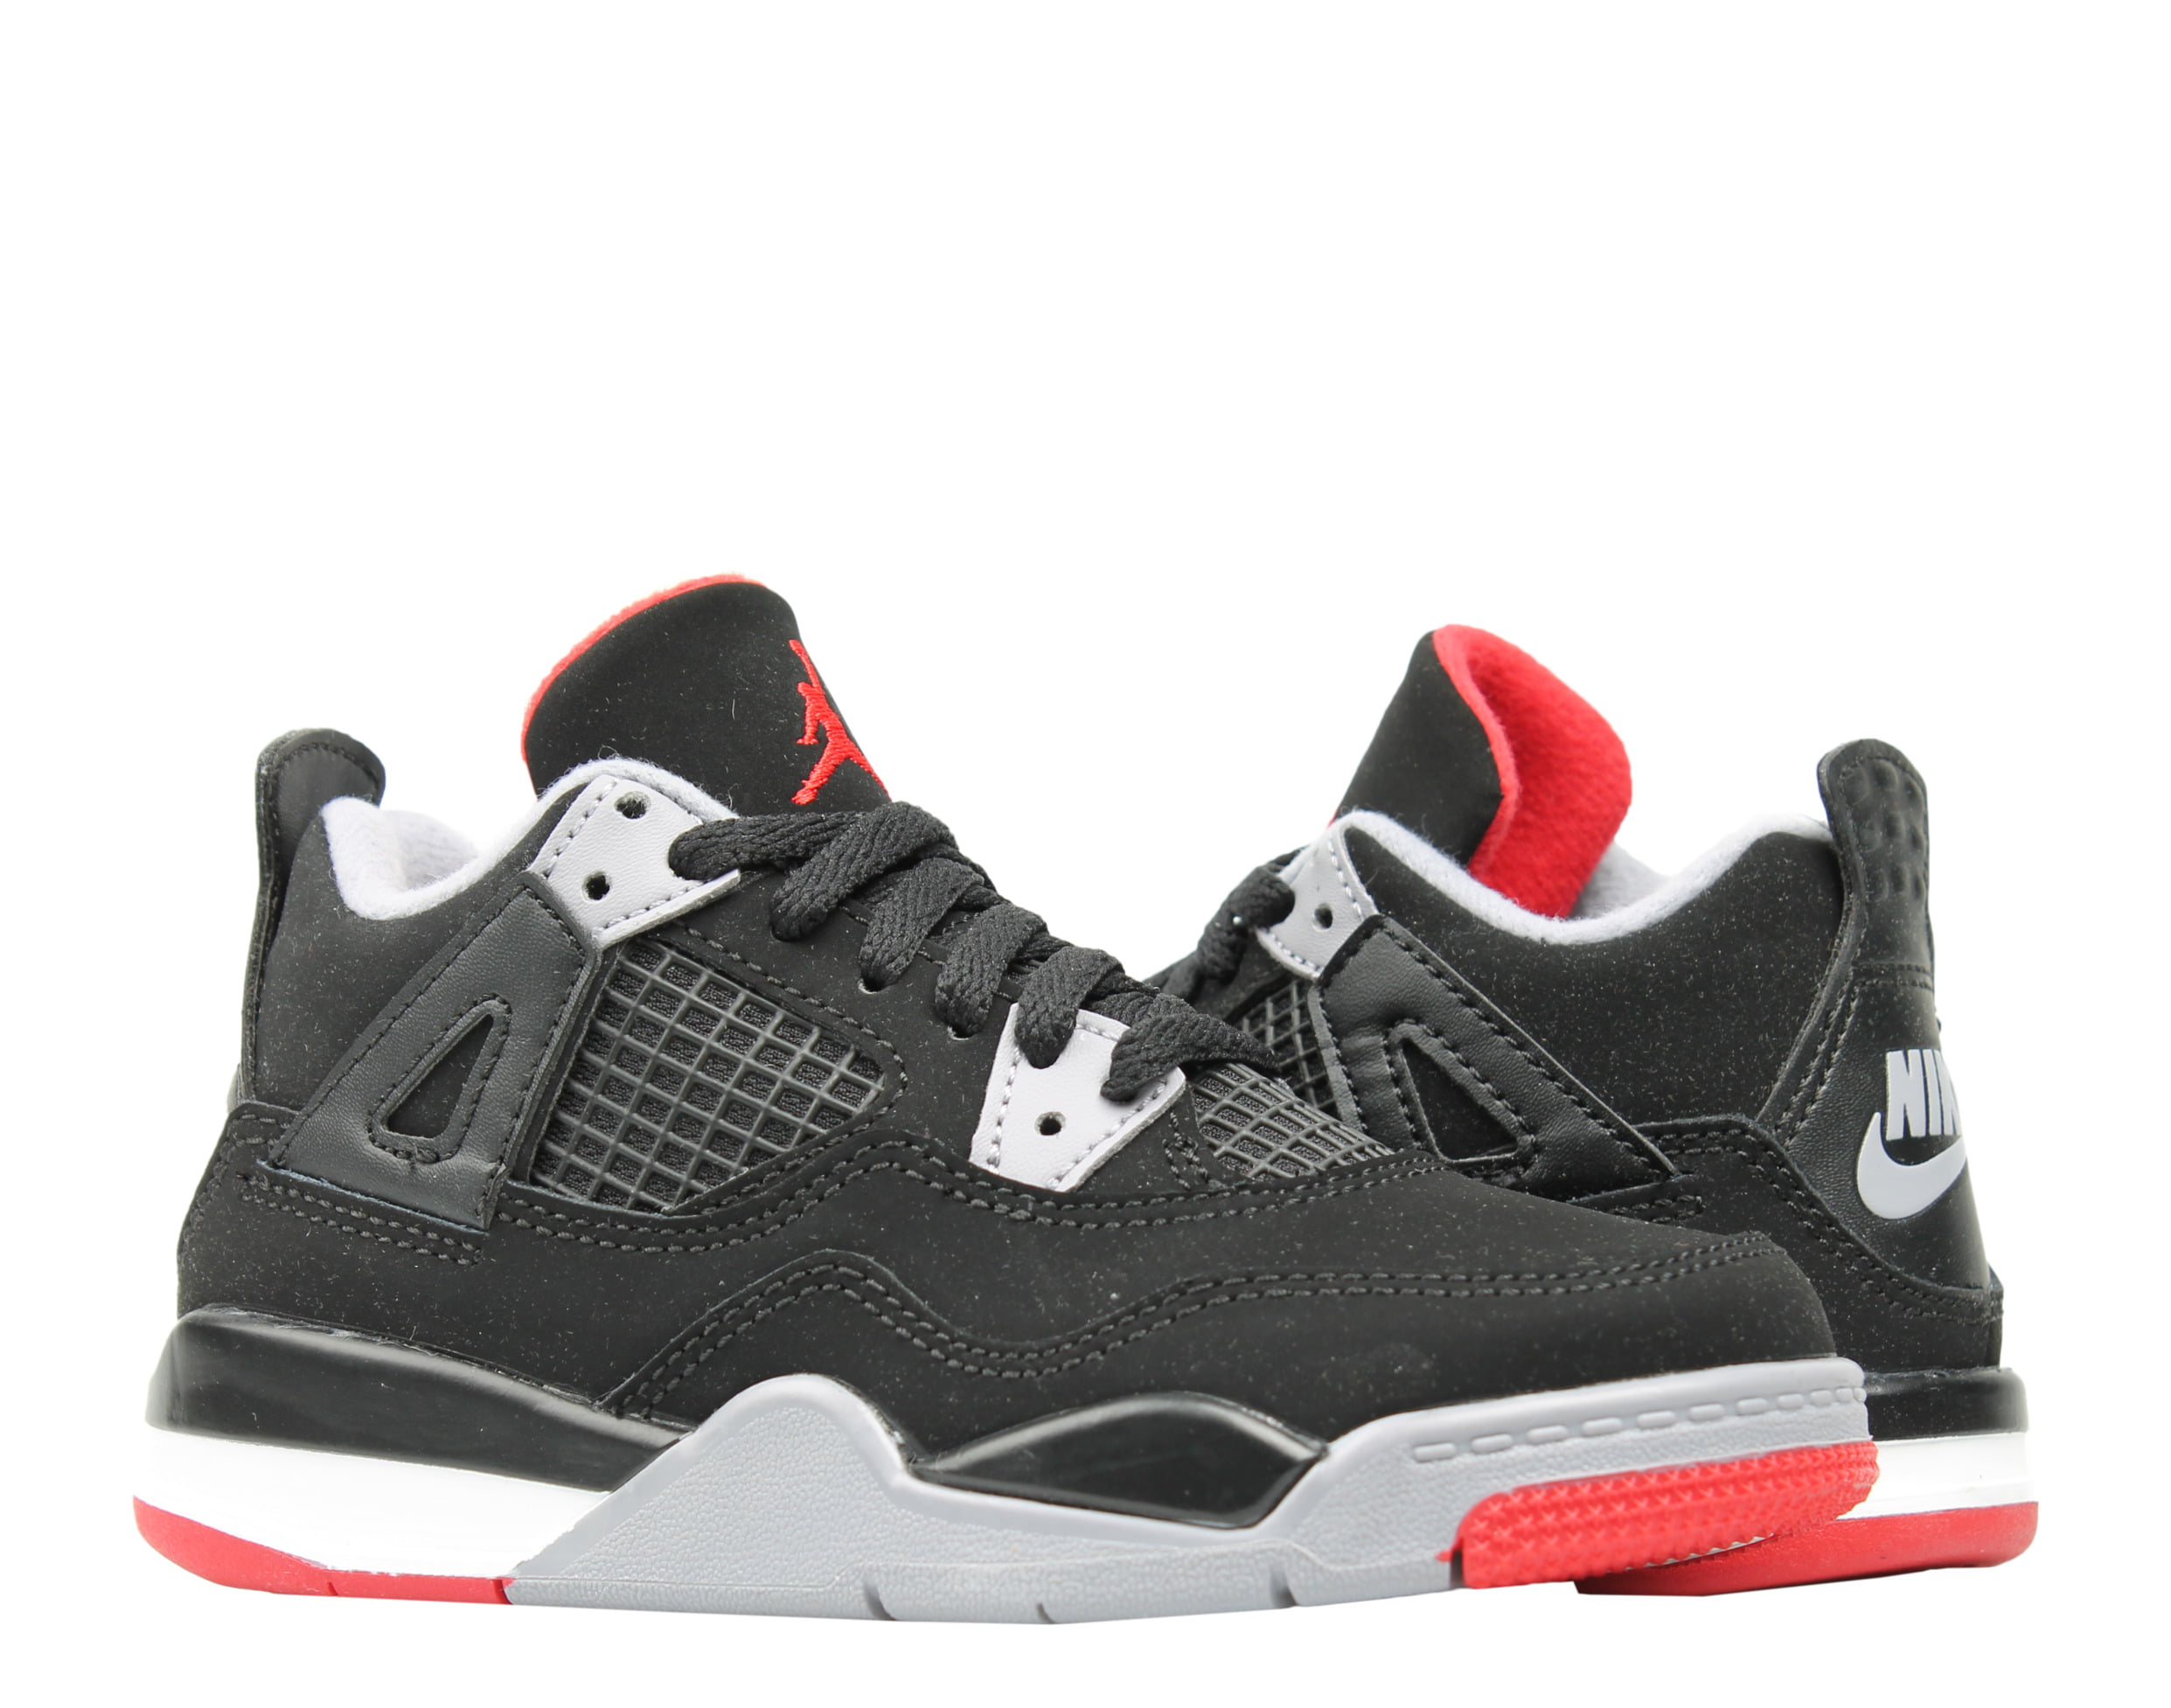 Nike Air Jordan 4 Retro (PS) Bred Little Kids Basketball Shoes 